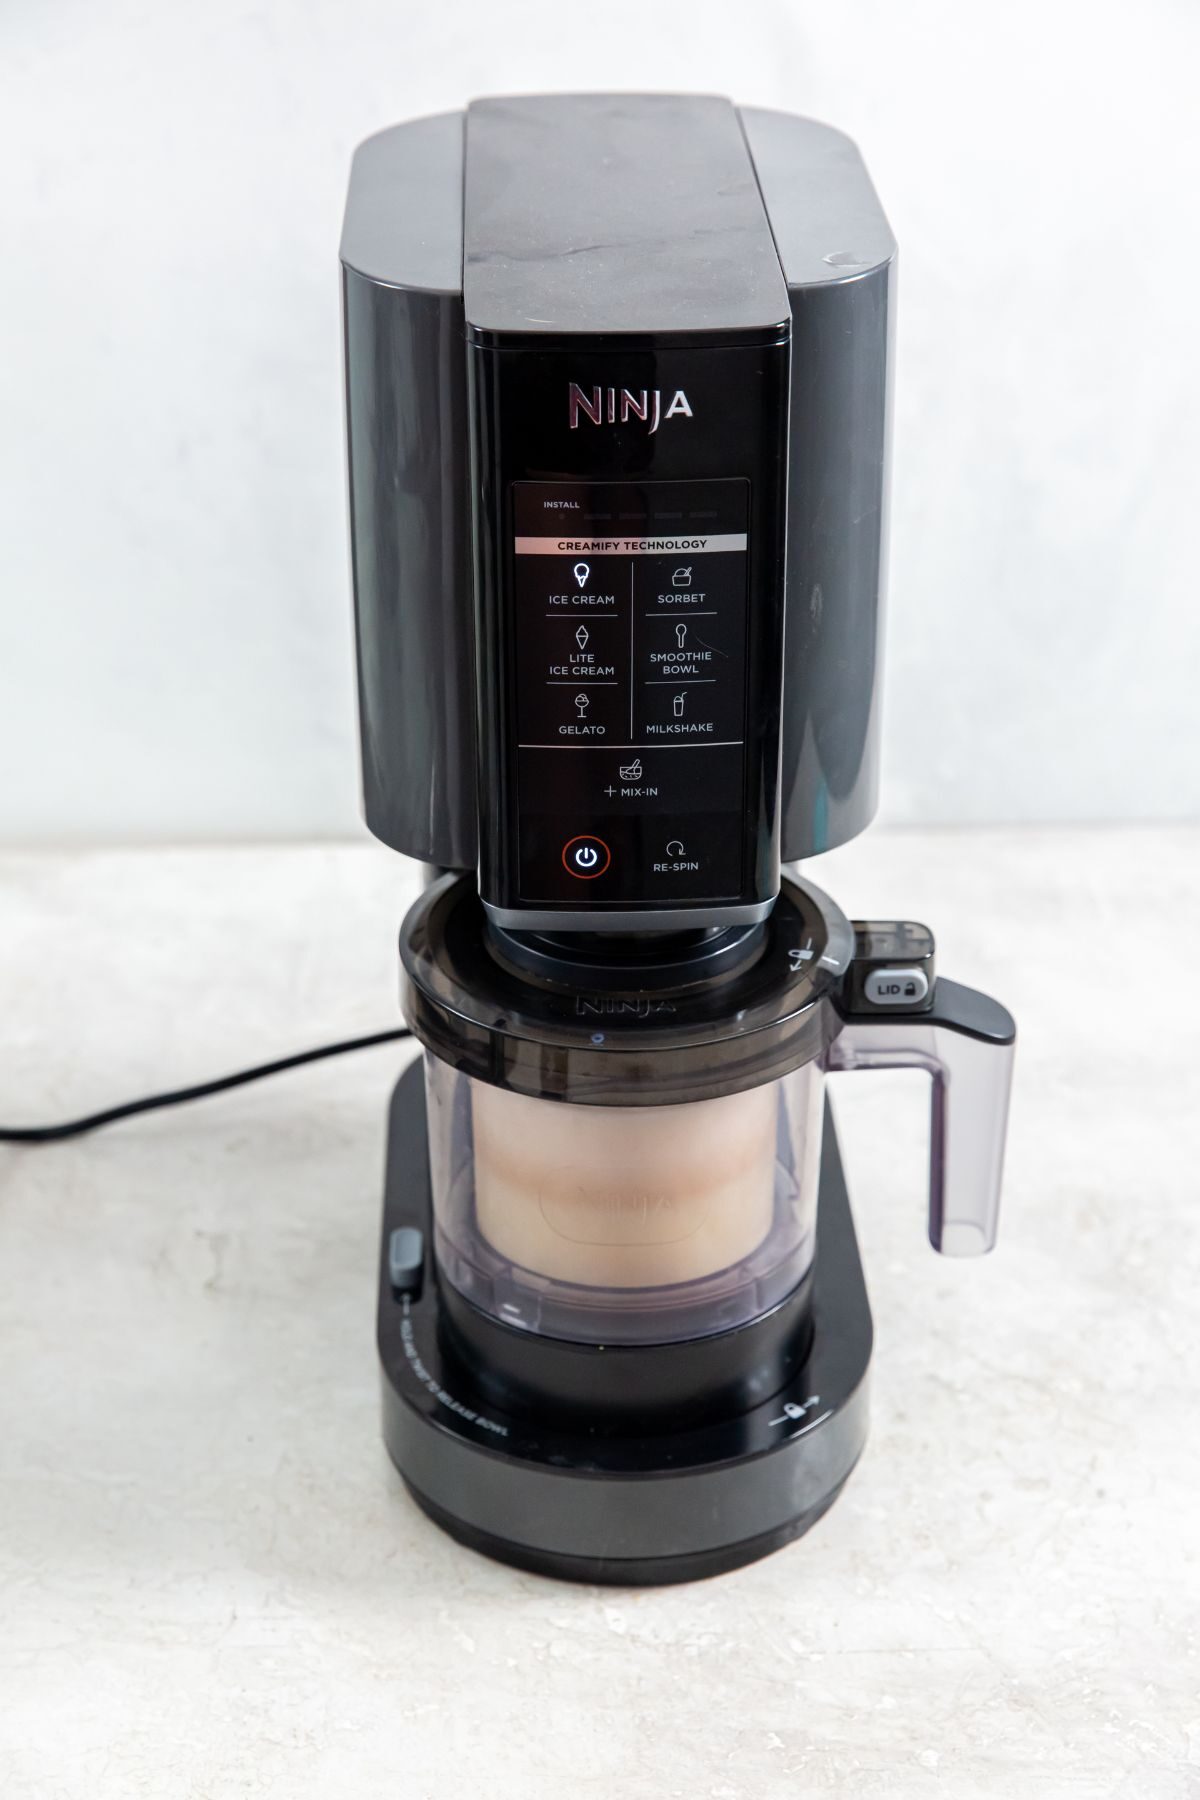 Ninja Creami with peanut butter ice cream in the mixer